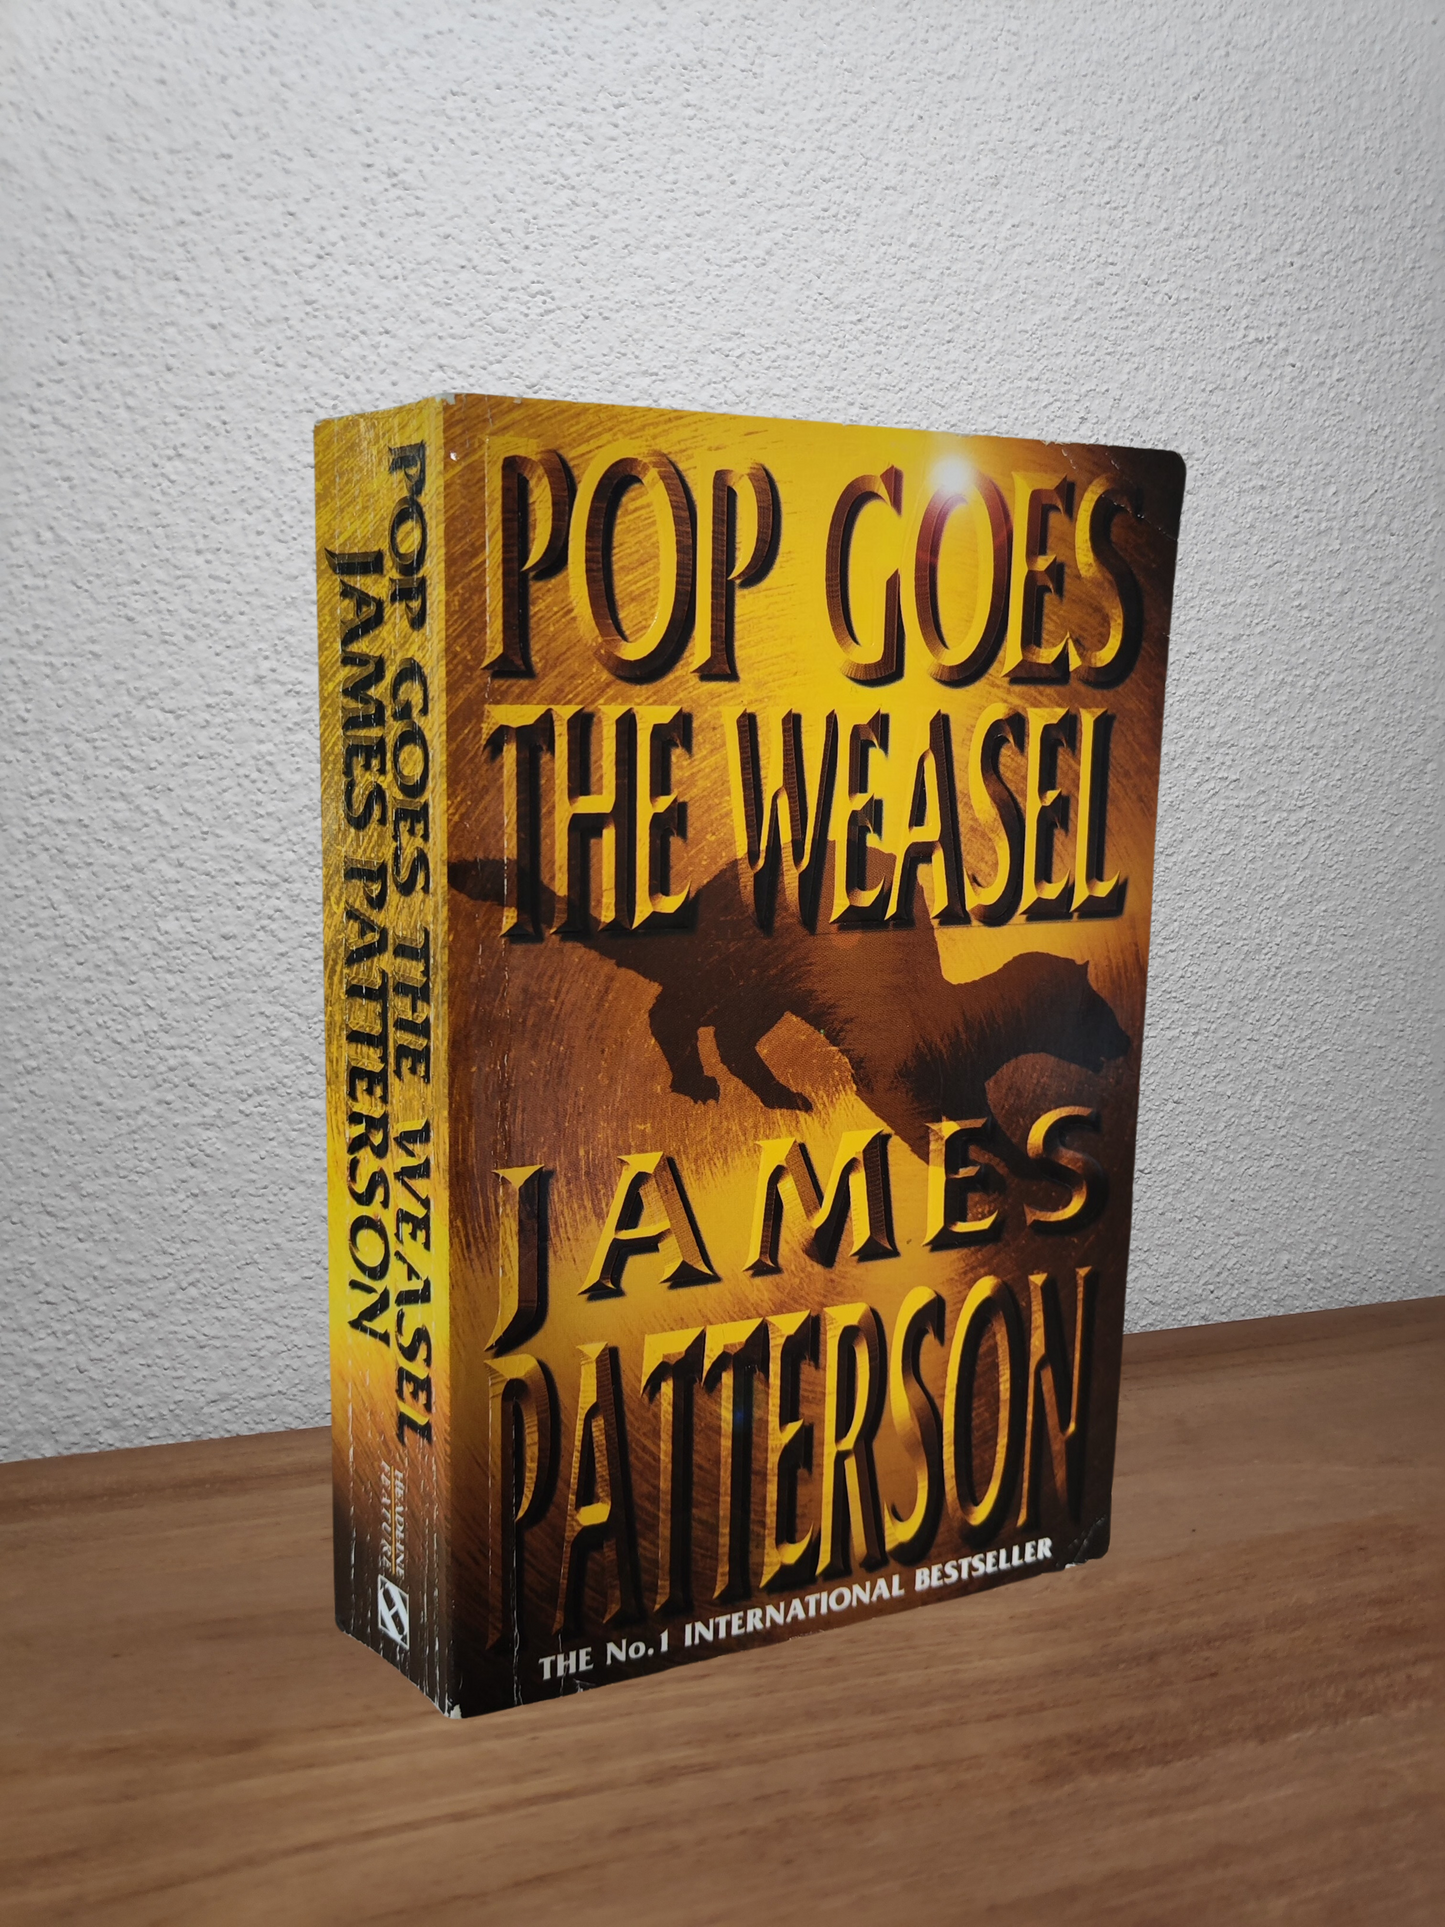 James Patterson - Pop Goes the Weasel (Alex Cross #5)